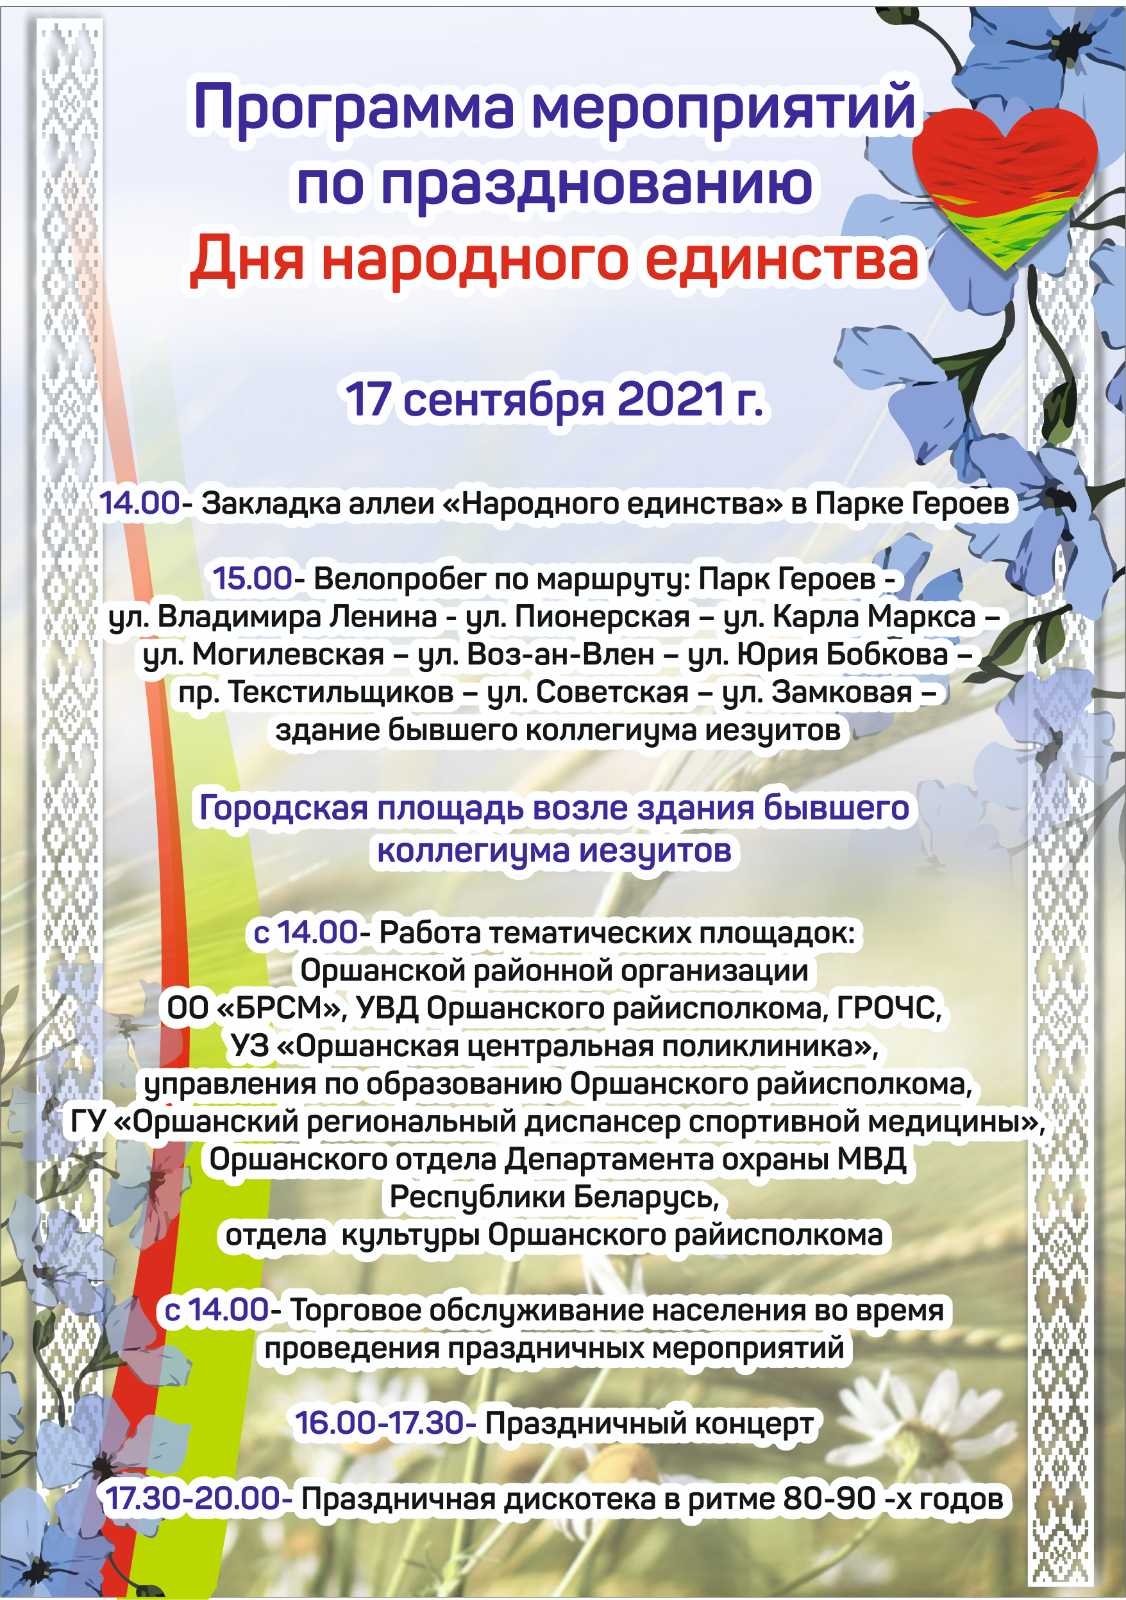 Программа мероприятий по празднованию Дня народного единства